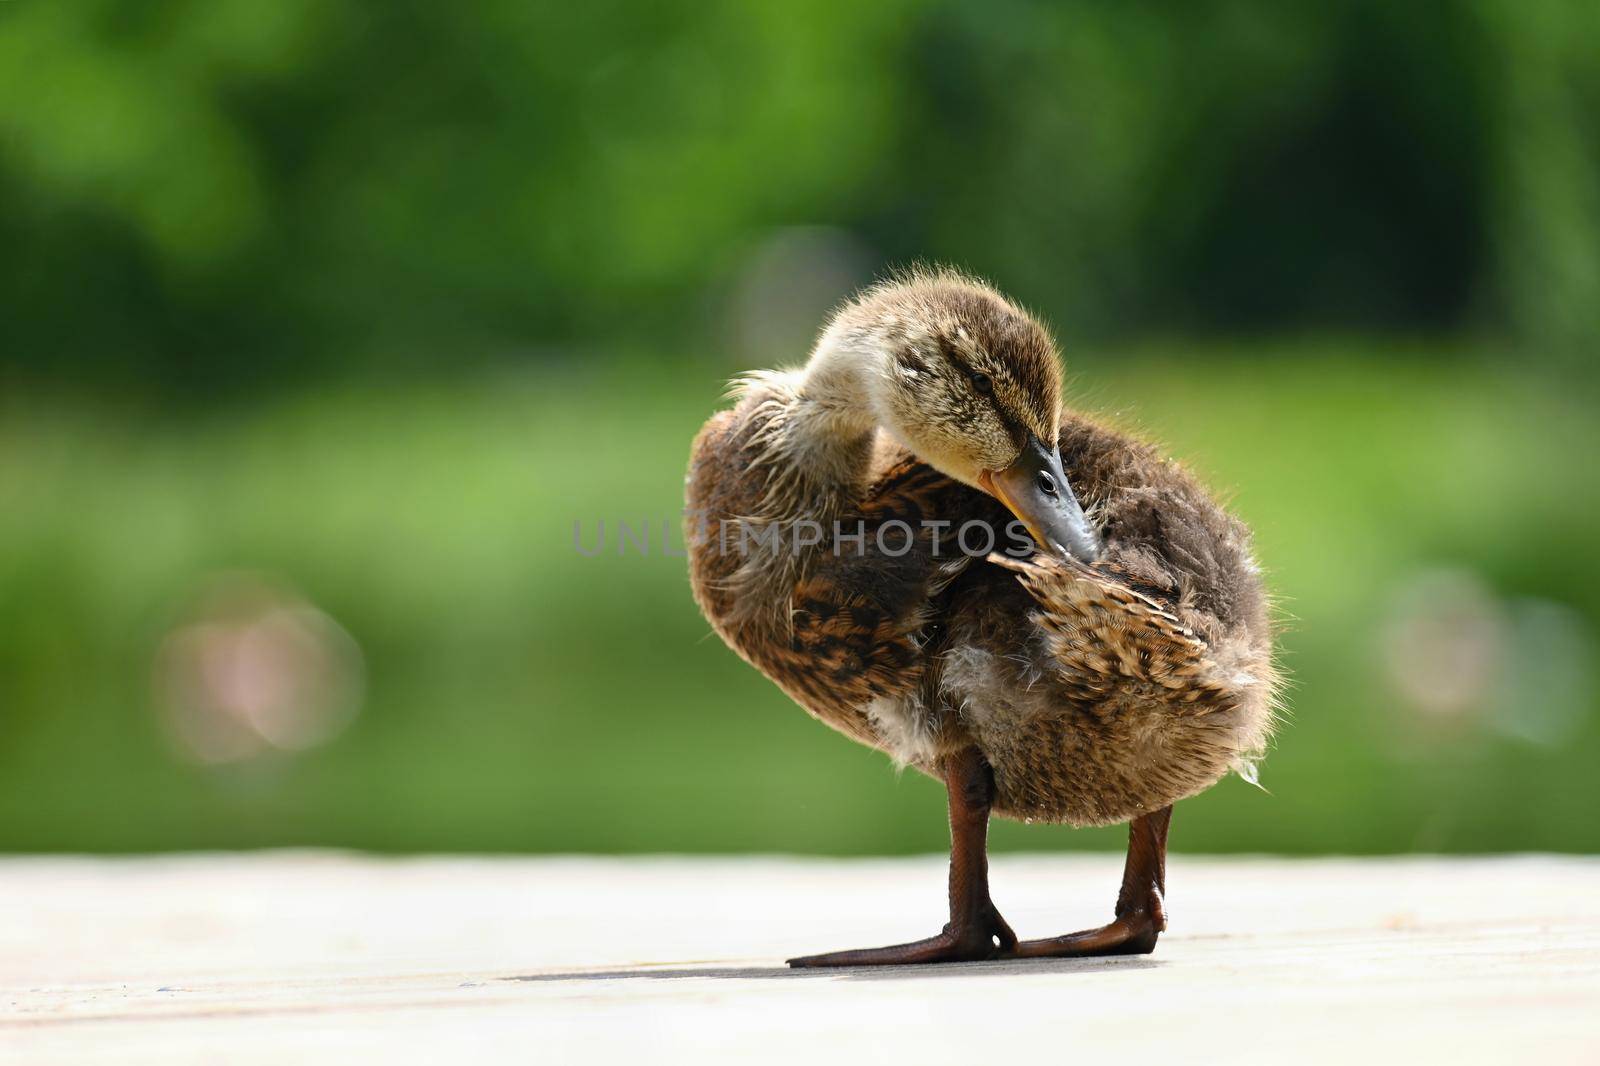 Small ducks by the pond. Fledglings mallards.(Anas platyrhynchos) by Montypeter